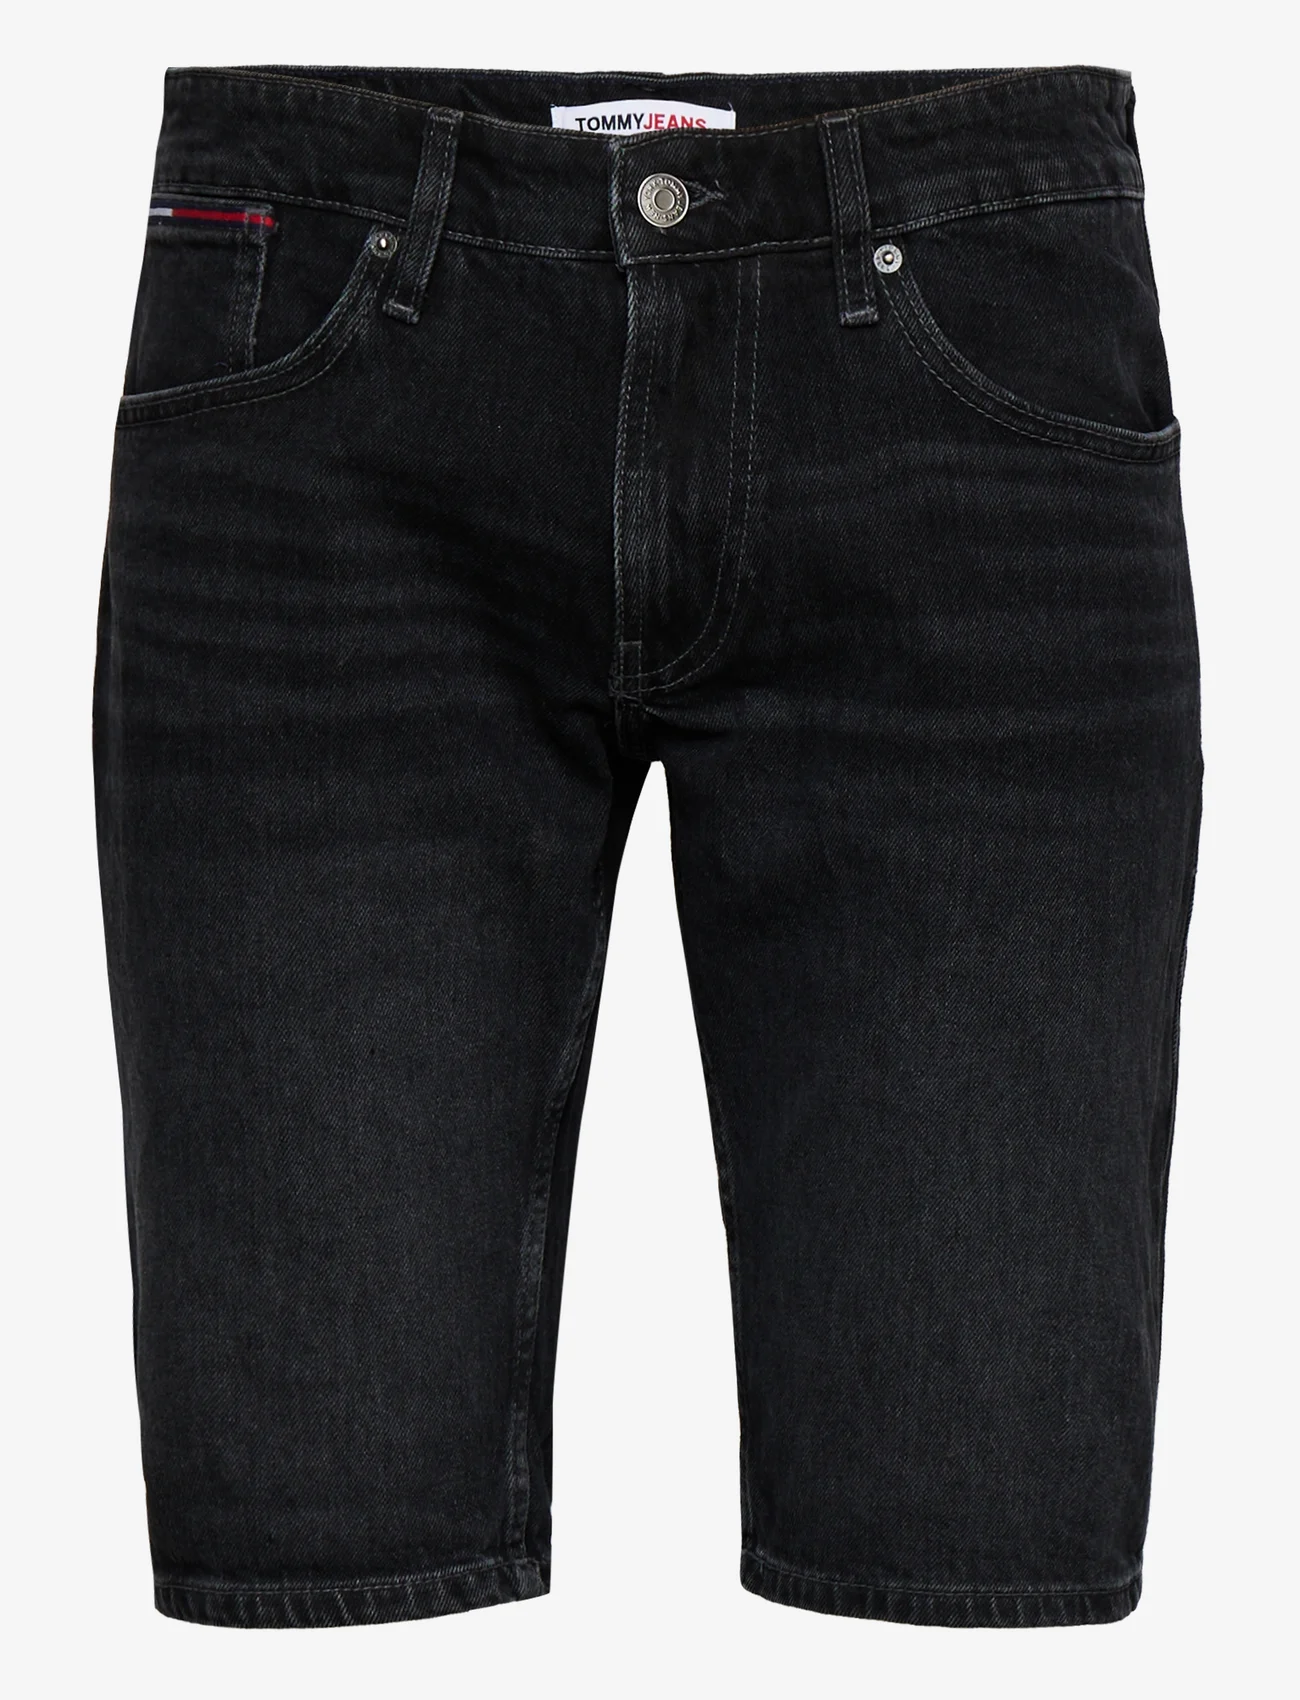 Tommy Jeans - RONNIE SHORT BG0181 - jeans shorts - denim black - 0